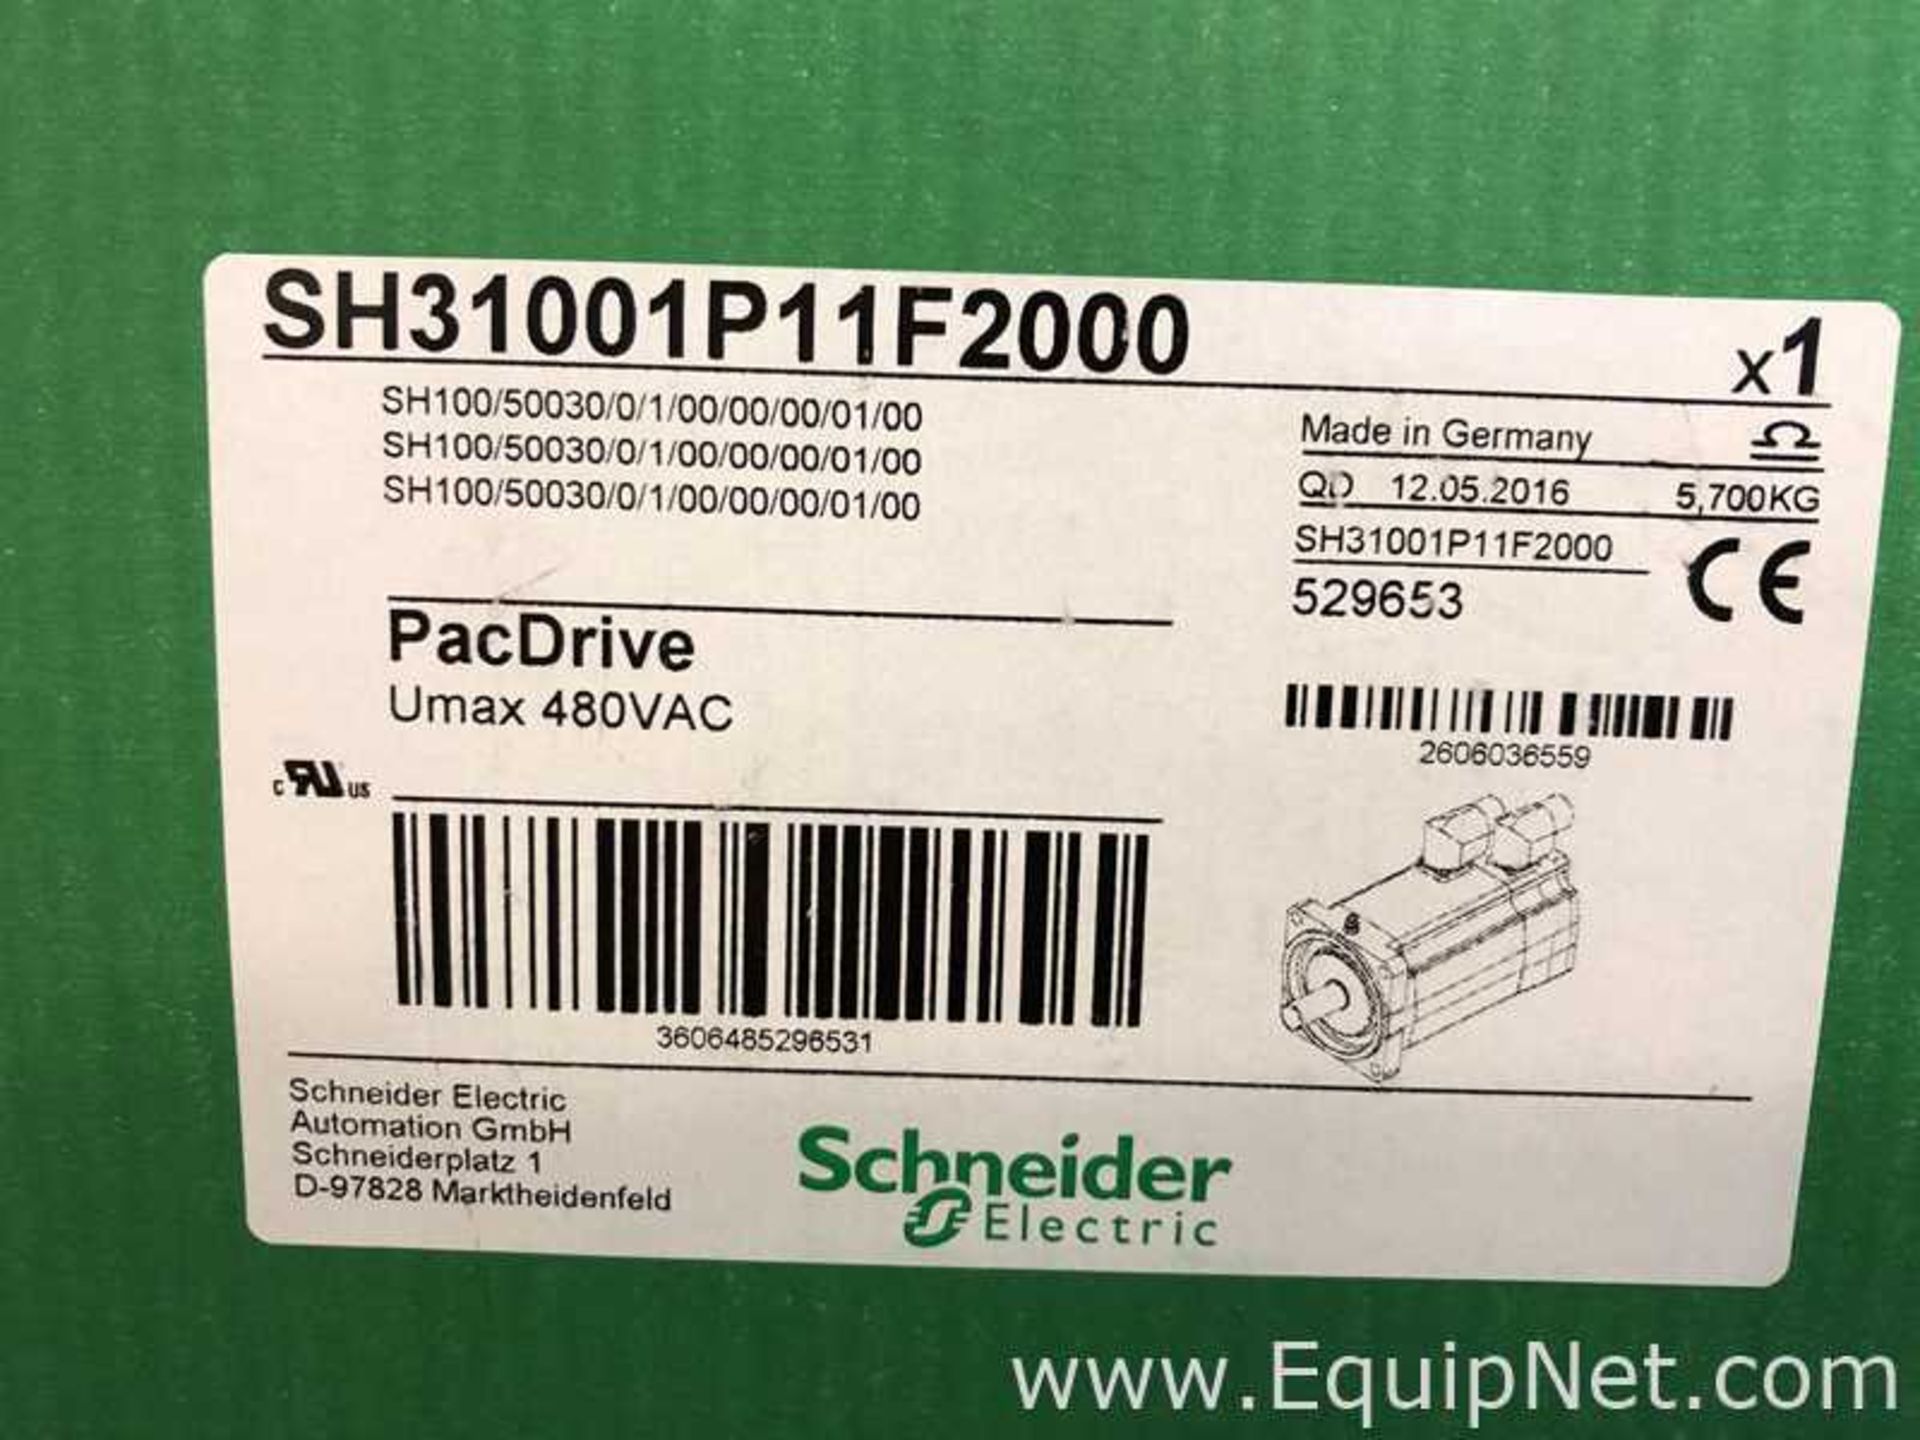 Unused Lot Of 3 Schneider Pack Drive Umax SH31001P11F2000 Servo Motor - Image 4 of 4